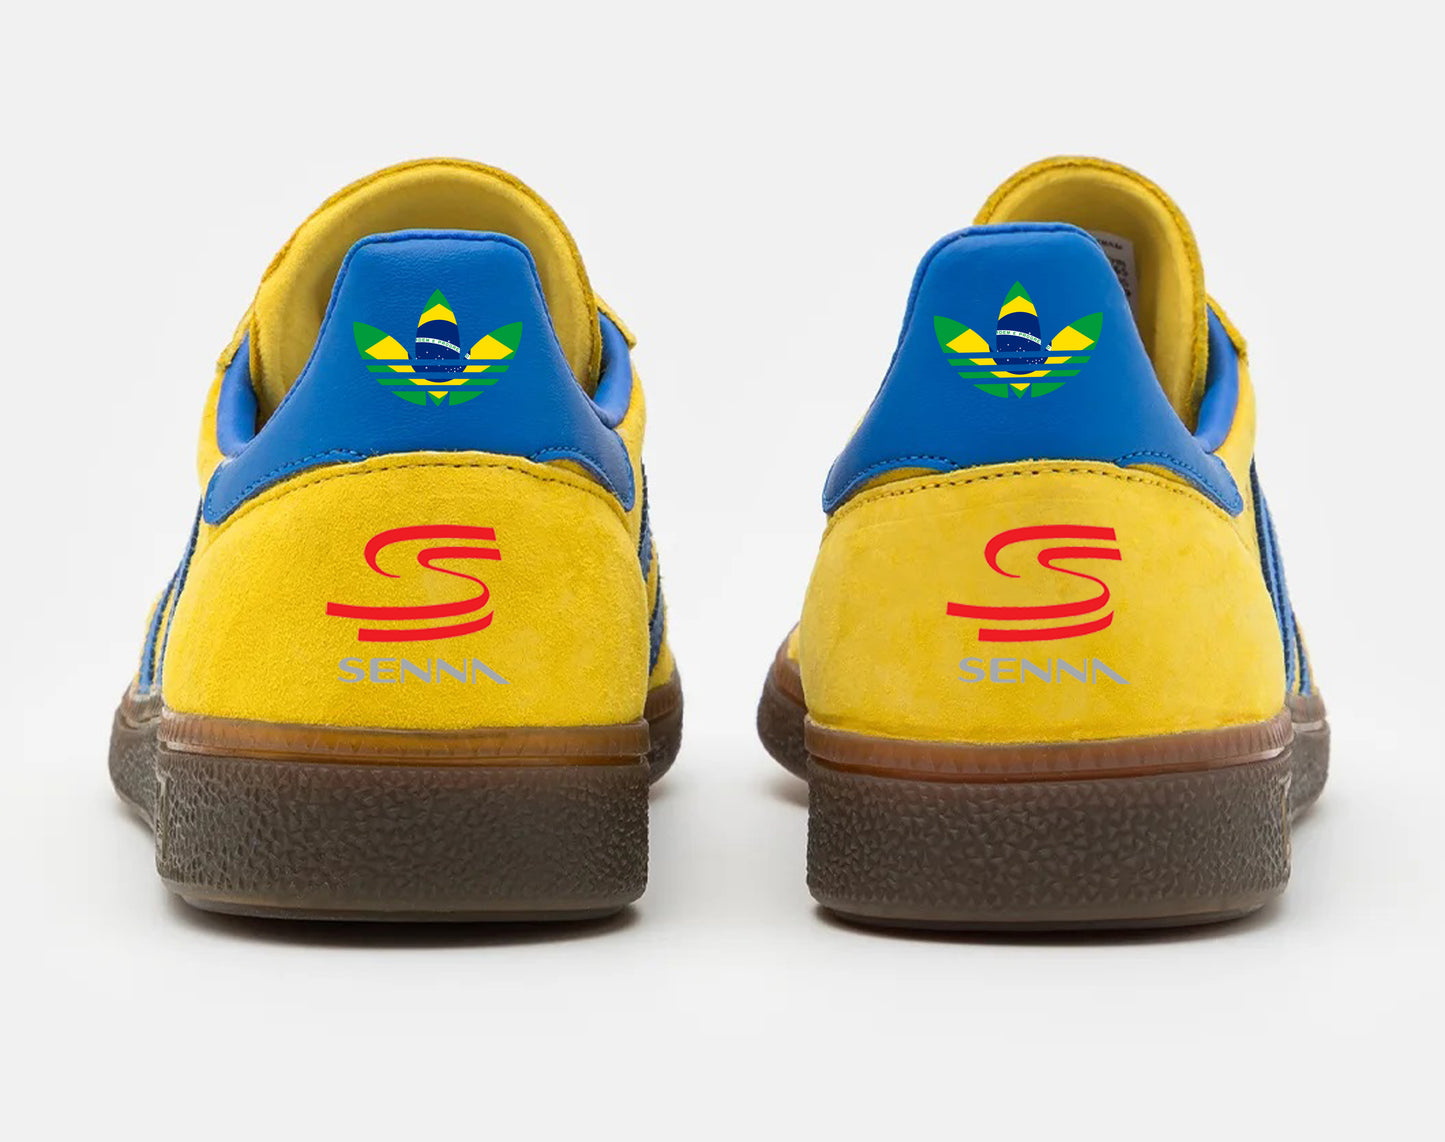 Limited edition F1 Ayrton Senna Yellow  / Green / Blue Adidas custom Handball Spezial trainers / sneakers